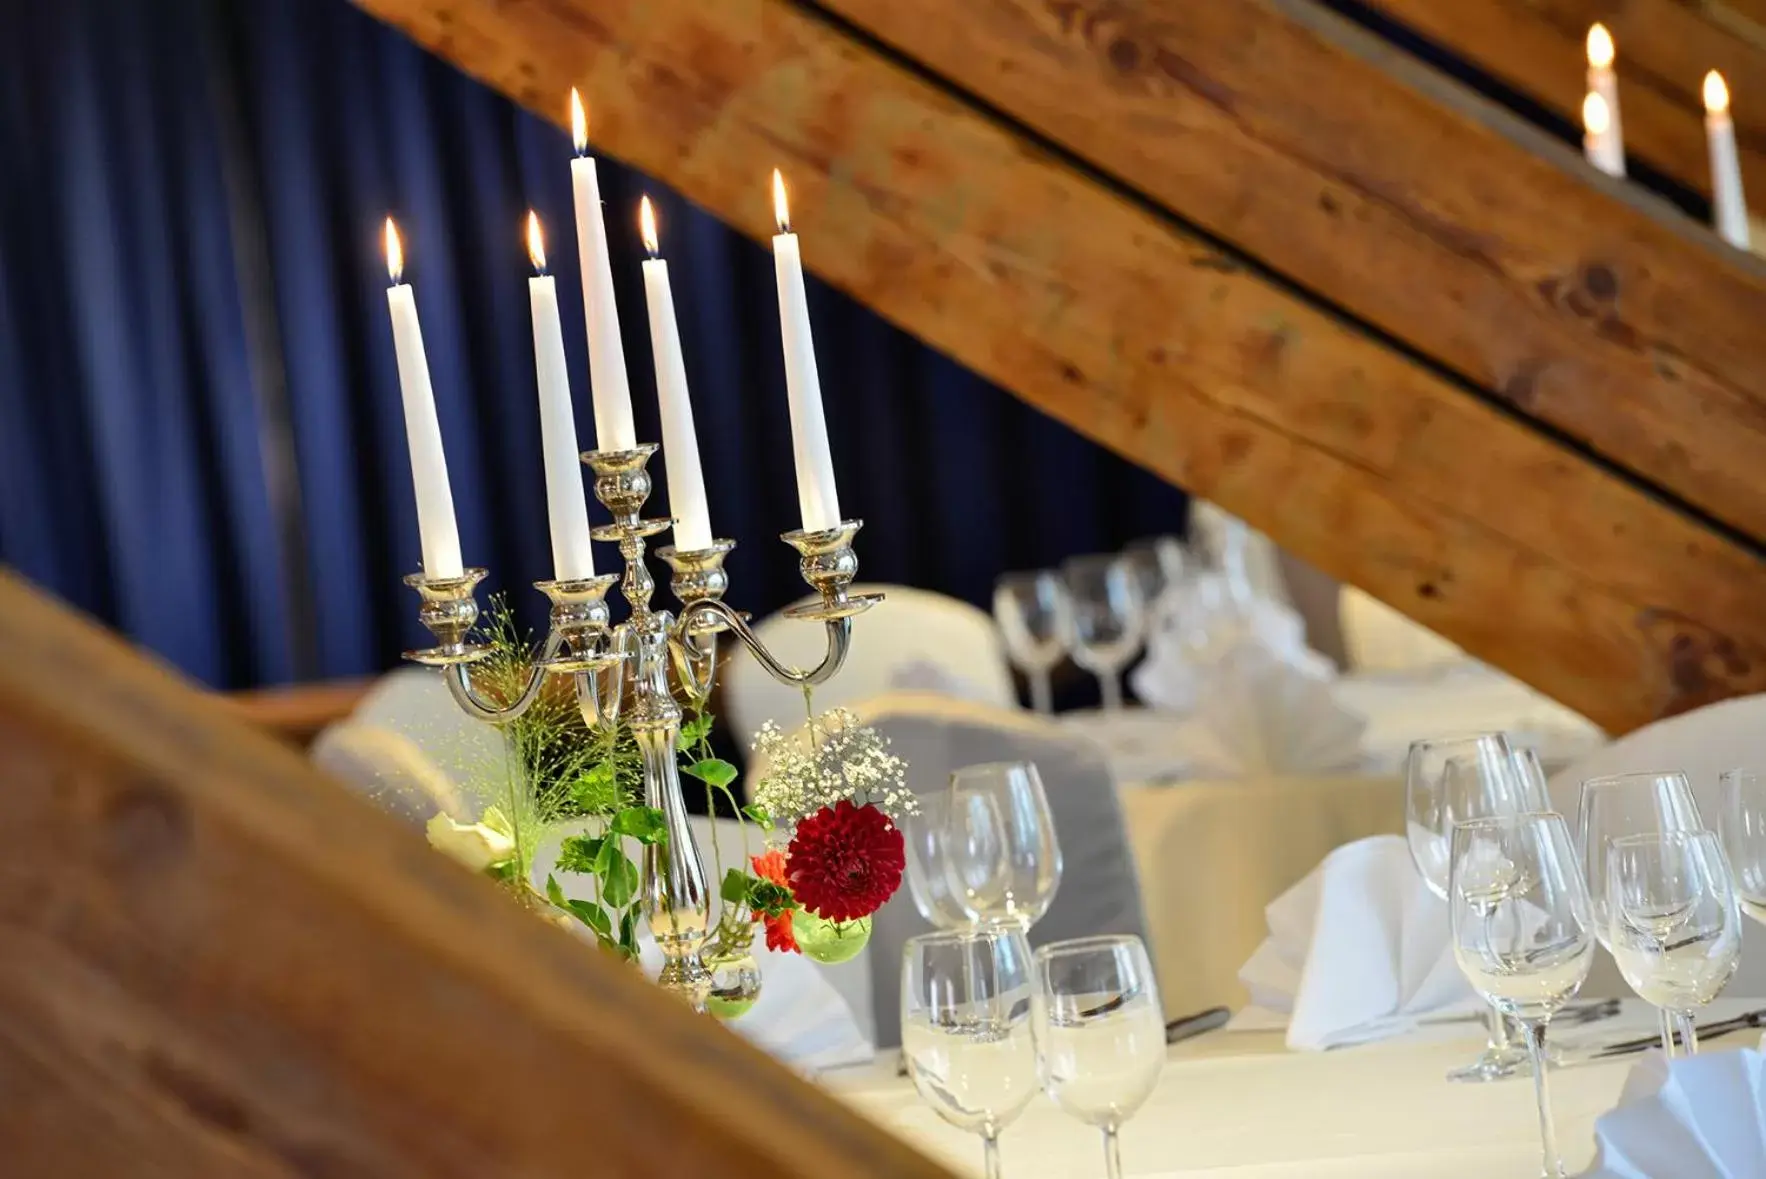 Meeting/conference room, Banquet Facilities in Hotel Der Lindenhof